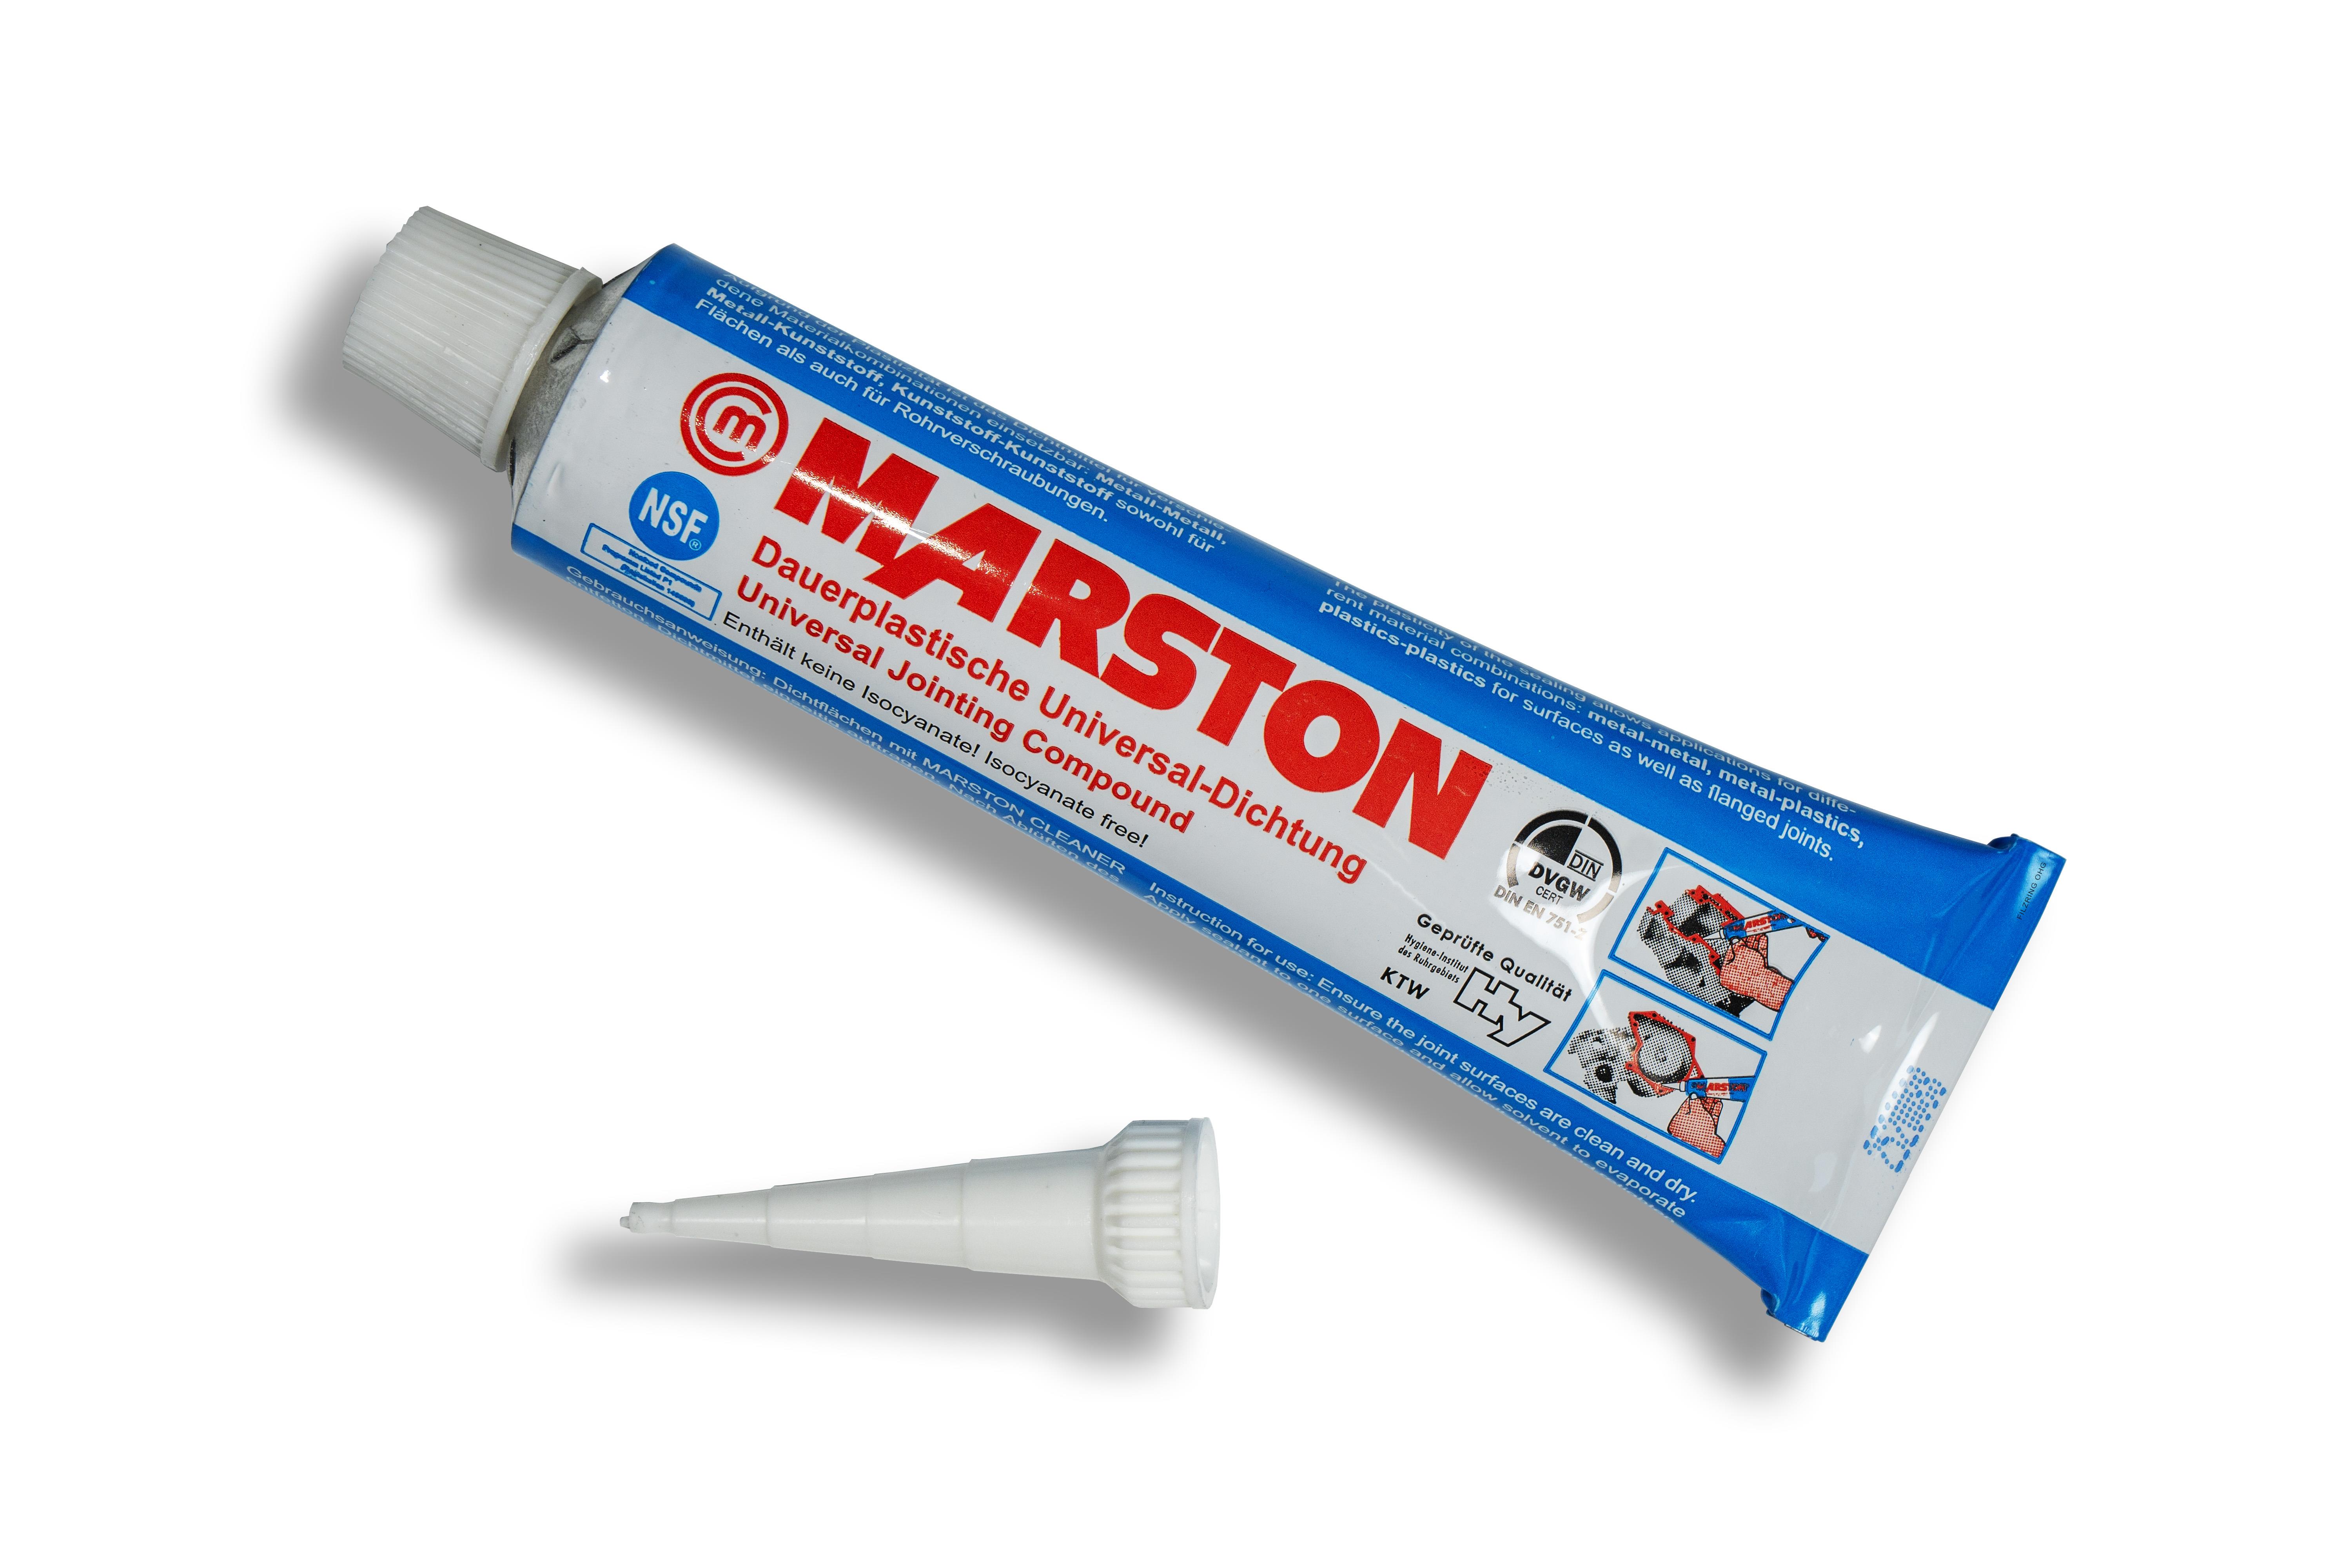 Marston Universal-Dichtung Tube, 85 g Tube